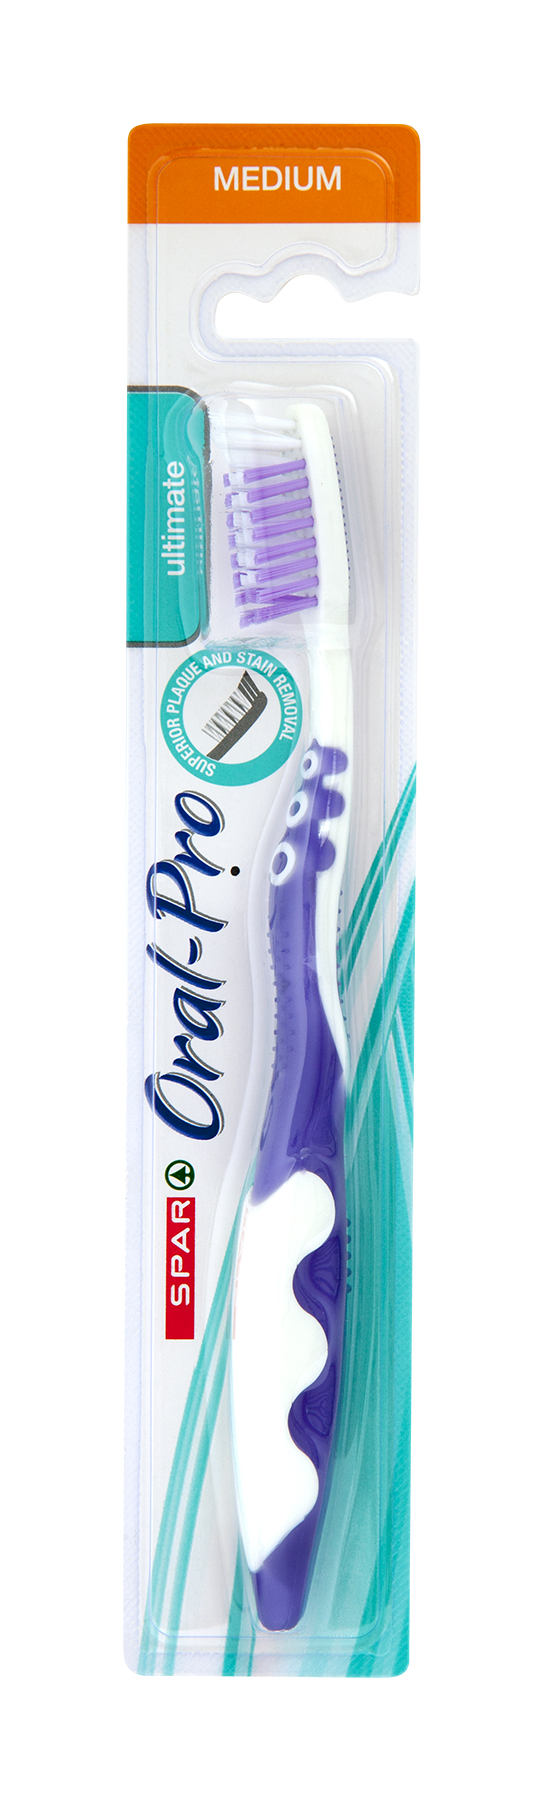 oral pro toothbrush ultimate - medium